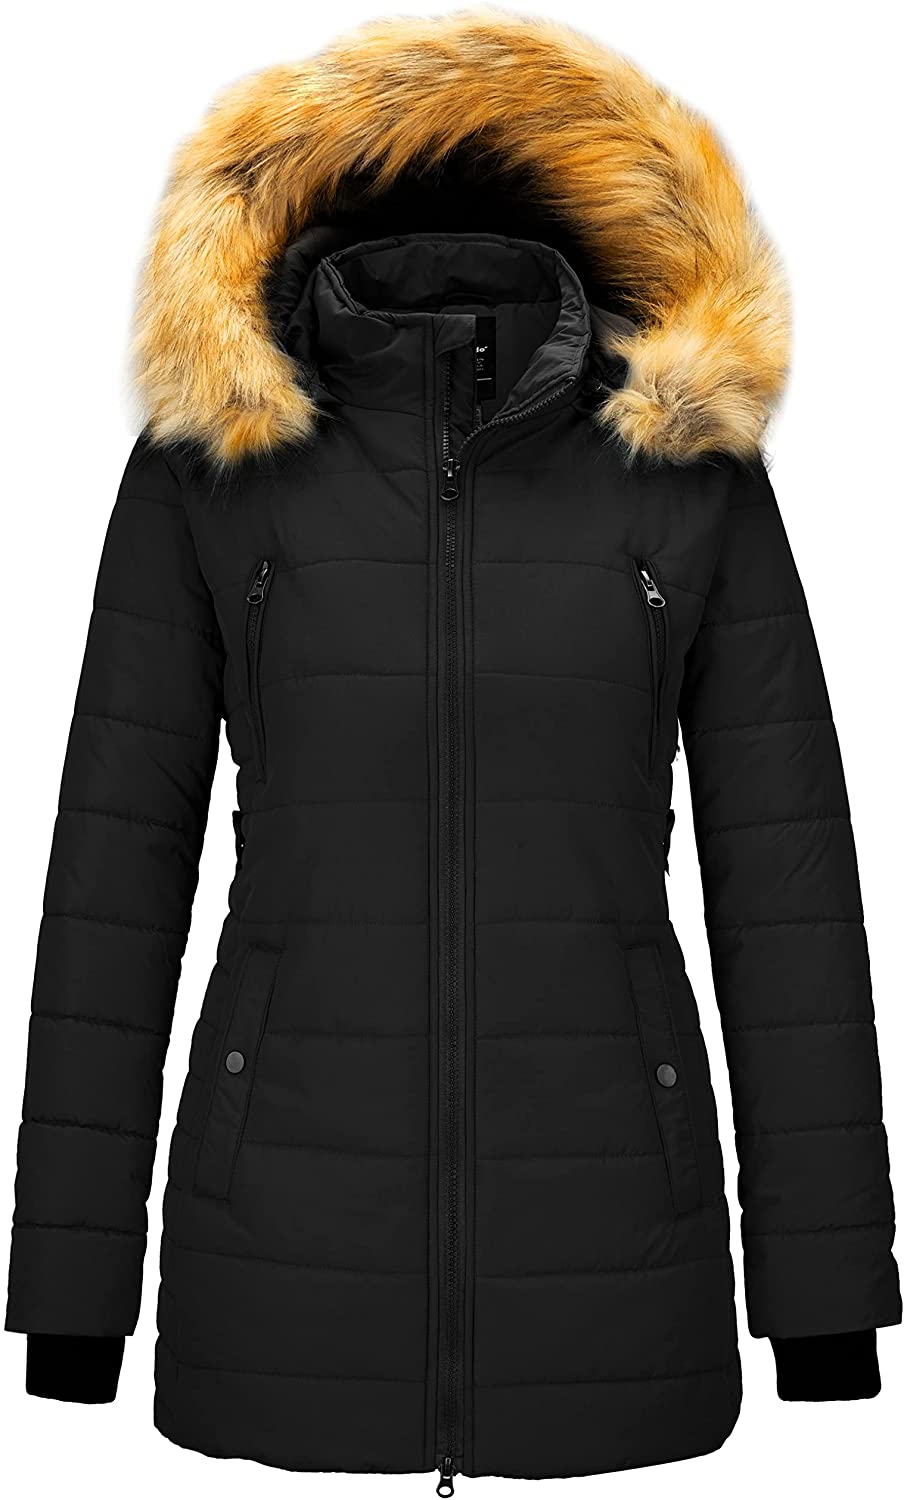 Wantdo Women's Warm Winter Coat Thicken Puffer Jacket Quilted Parka ...